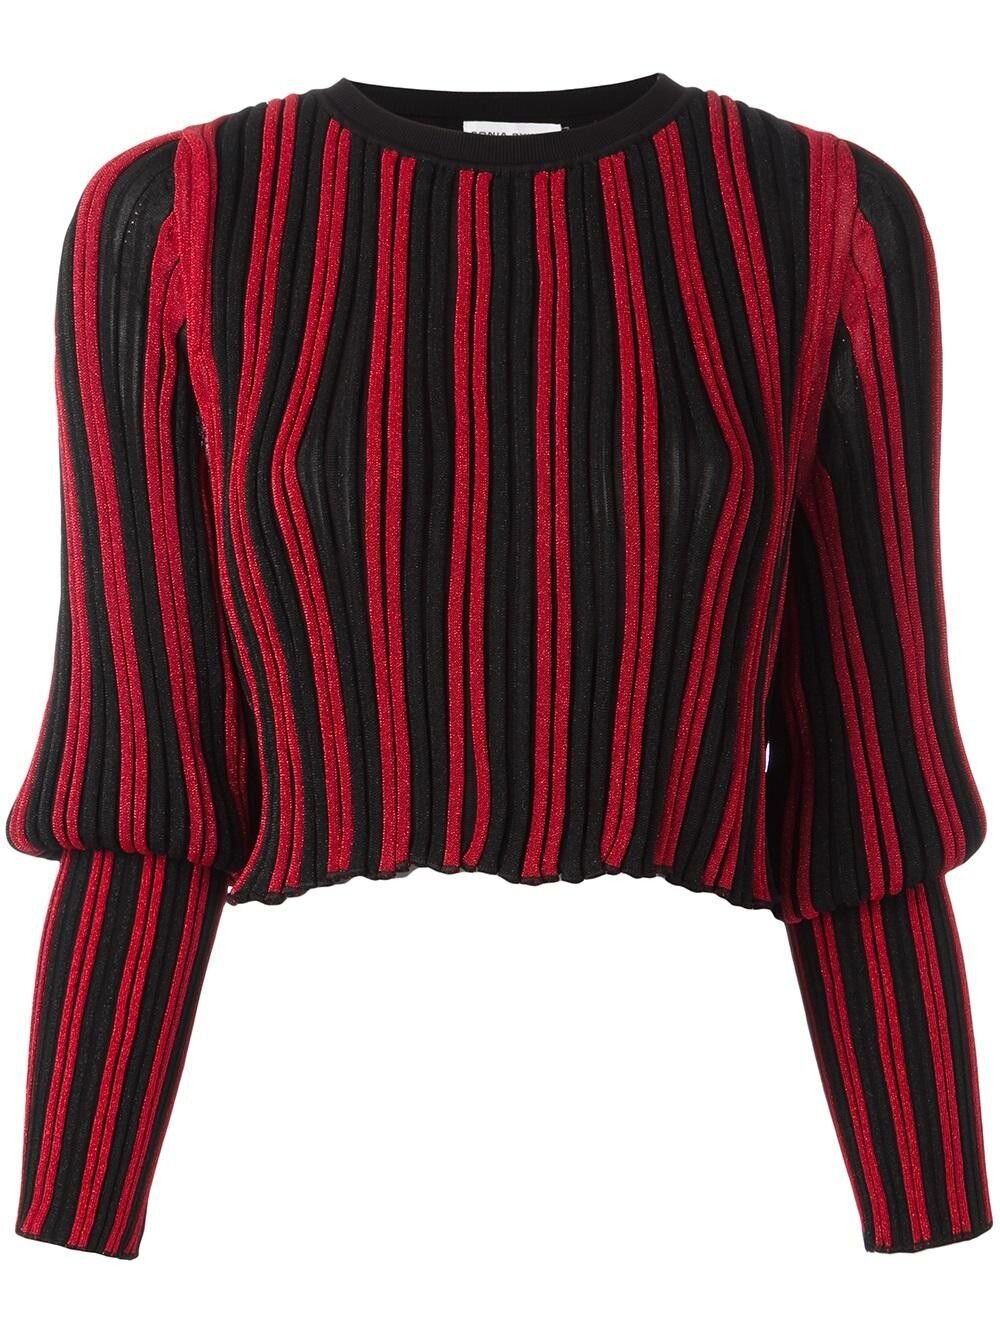 Sonia Rykiel Metallic Striped Stretch-Knit Top in Red.jpg